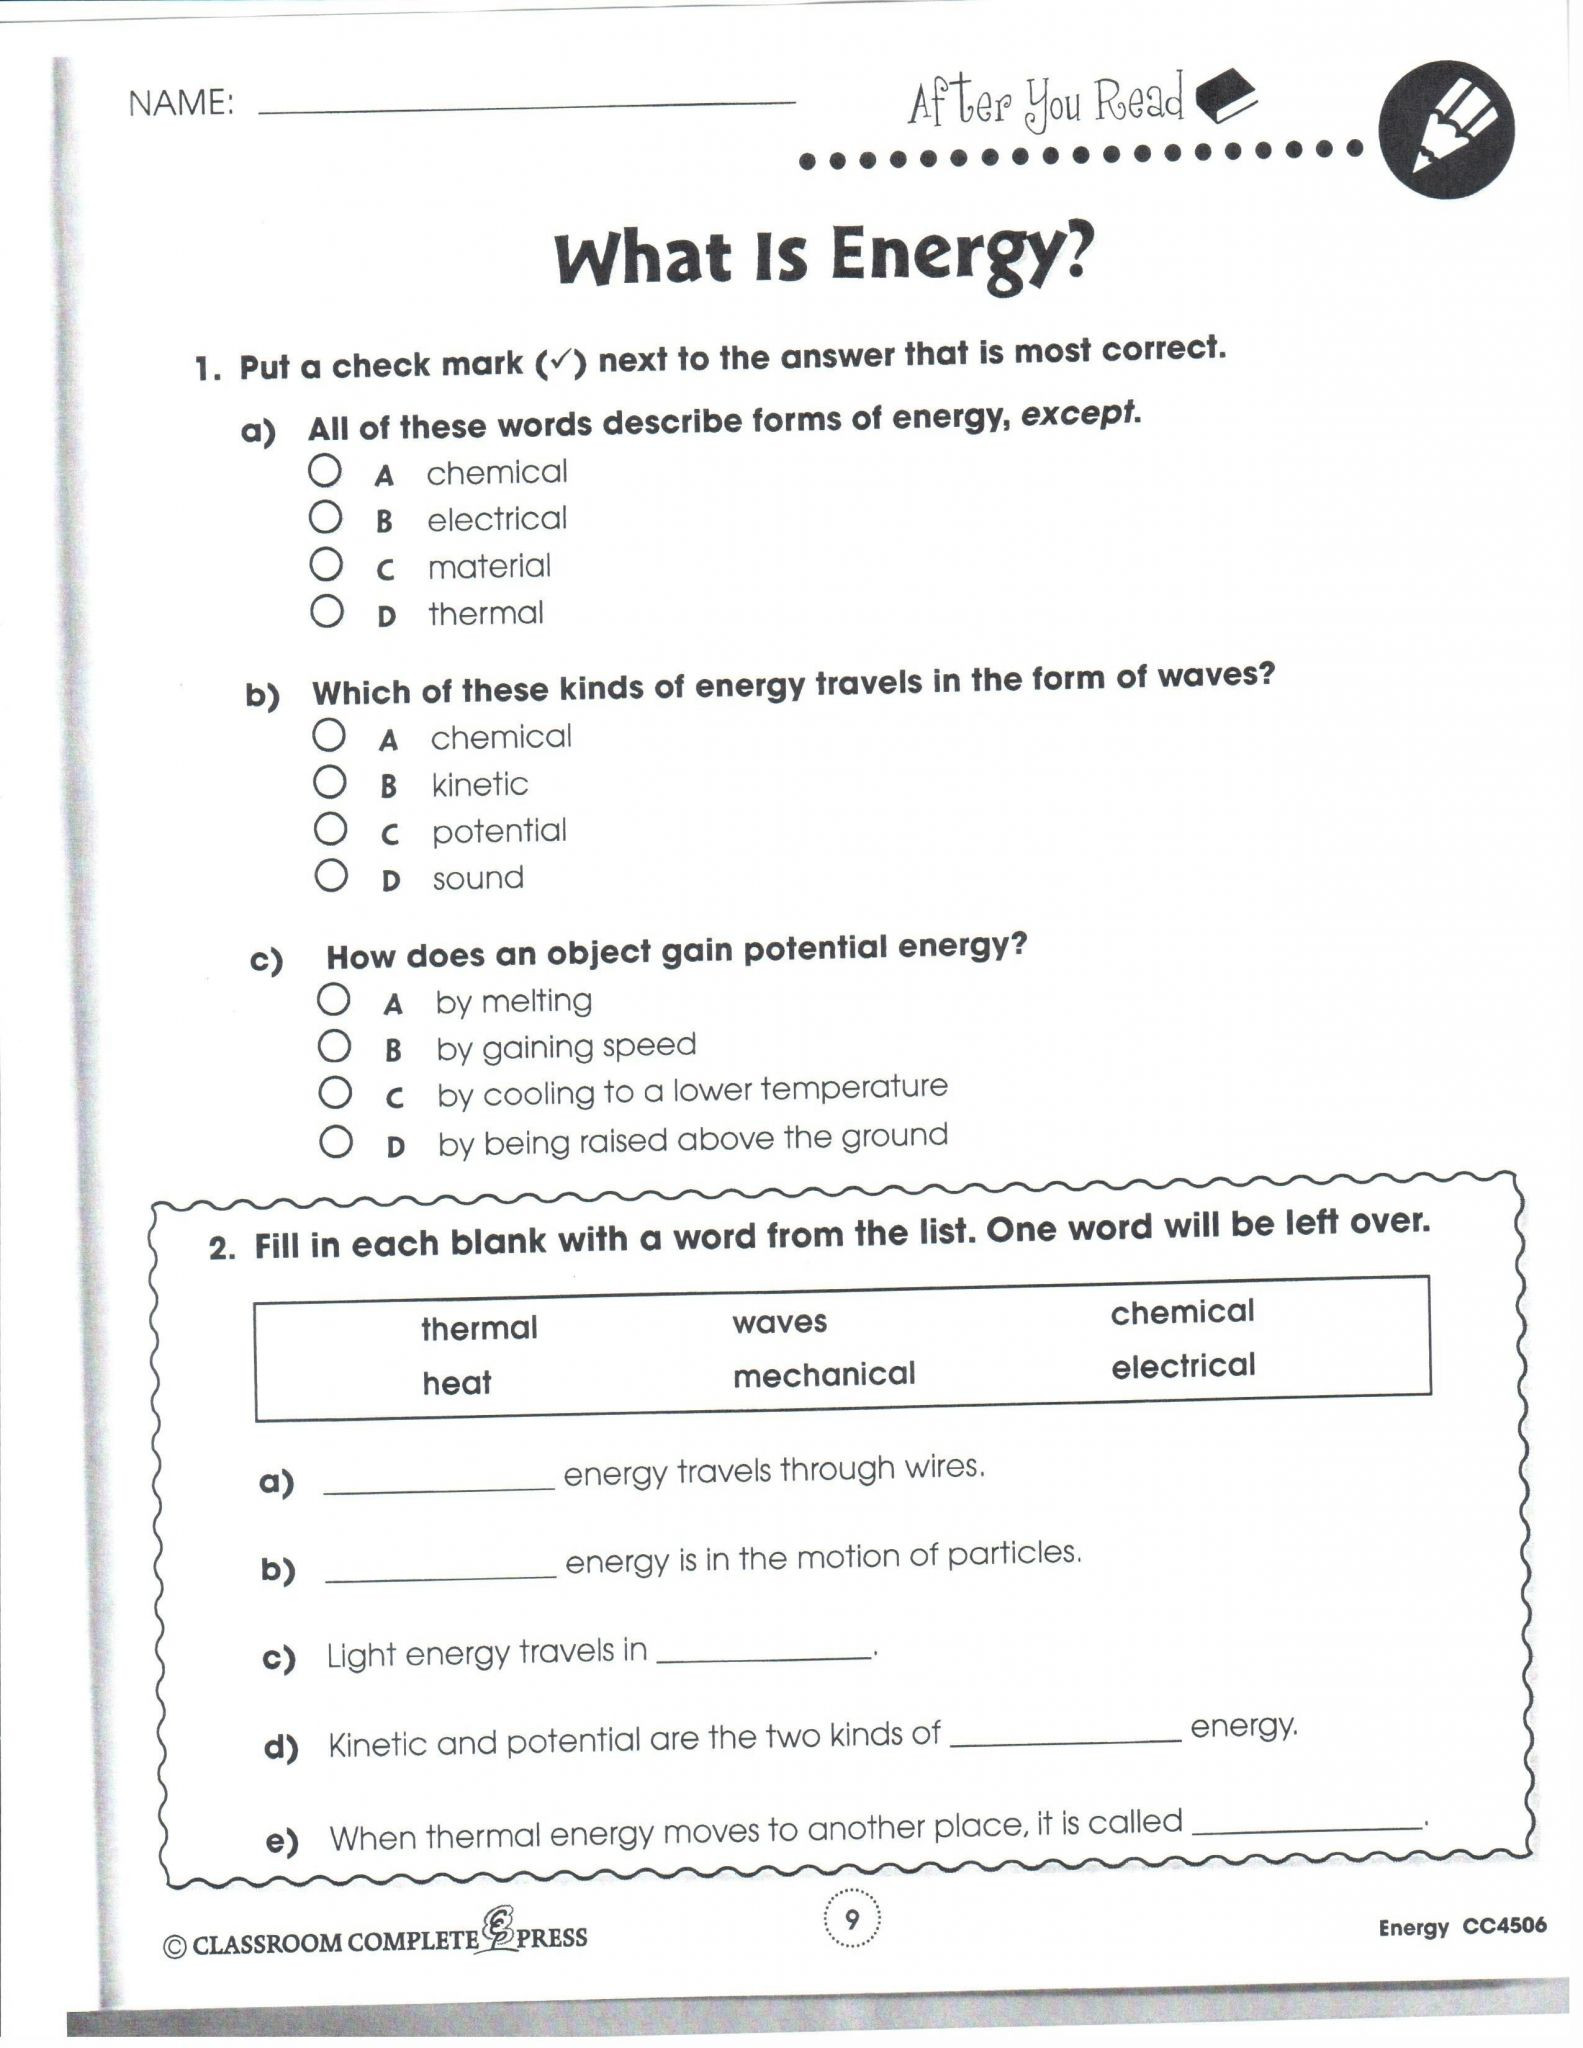 Potential Vs Kinetic Energy Worksheet 32 Kinetic and Potential Energy Worksheet Answers Key